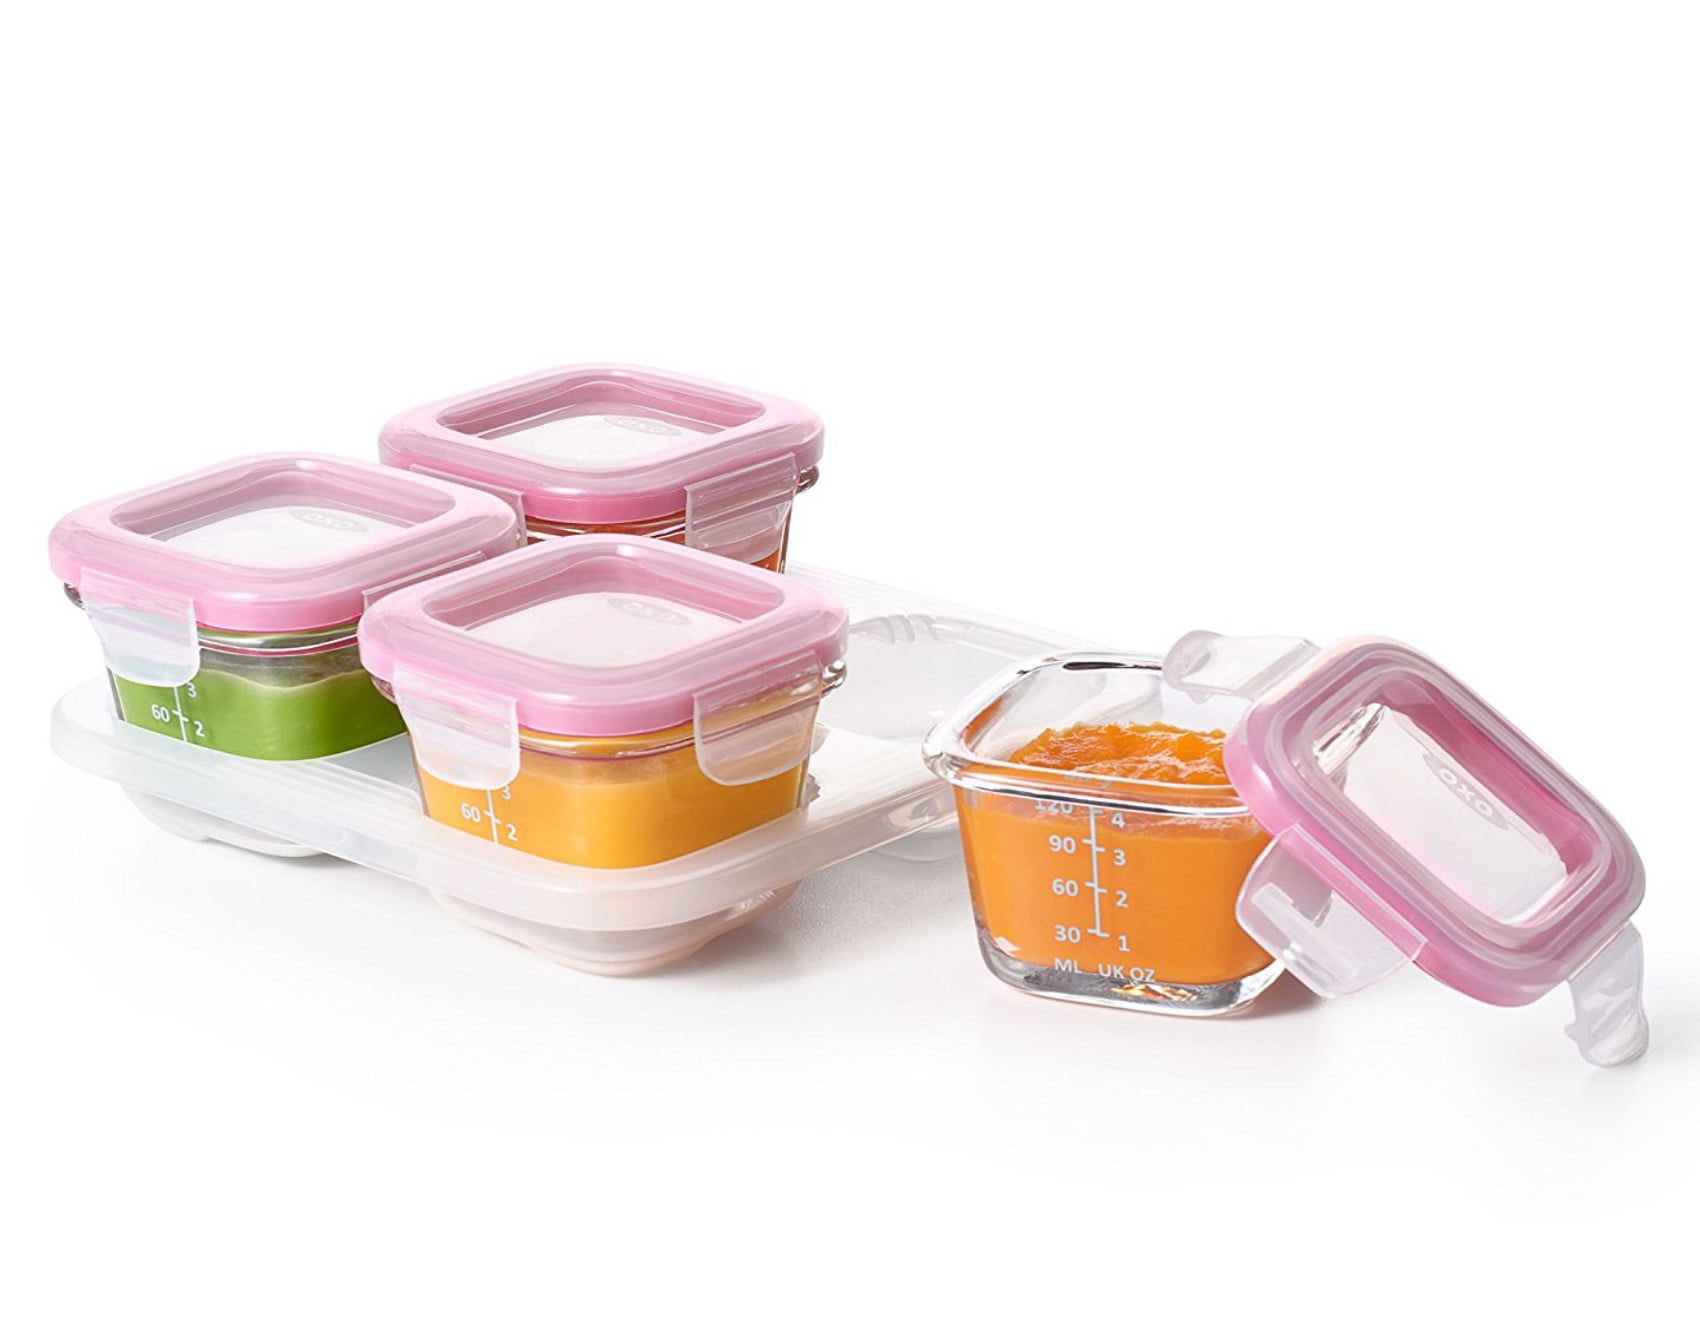 OXO Tot Baby Glass Food Storage Blocks - 8pc